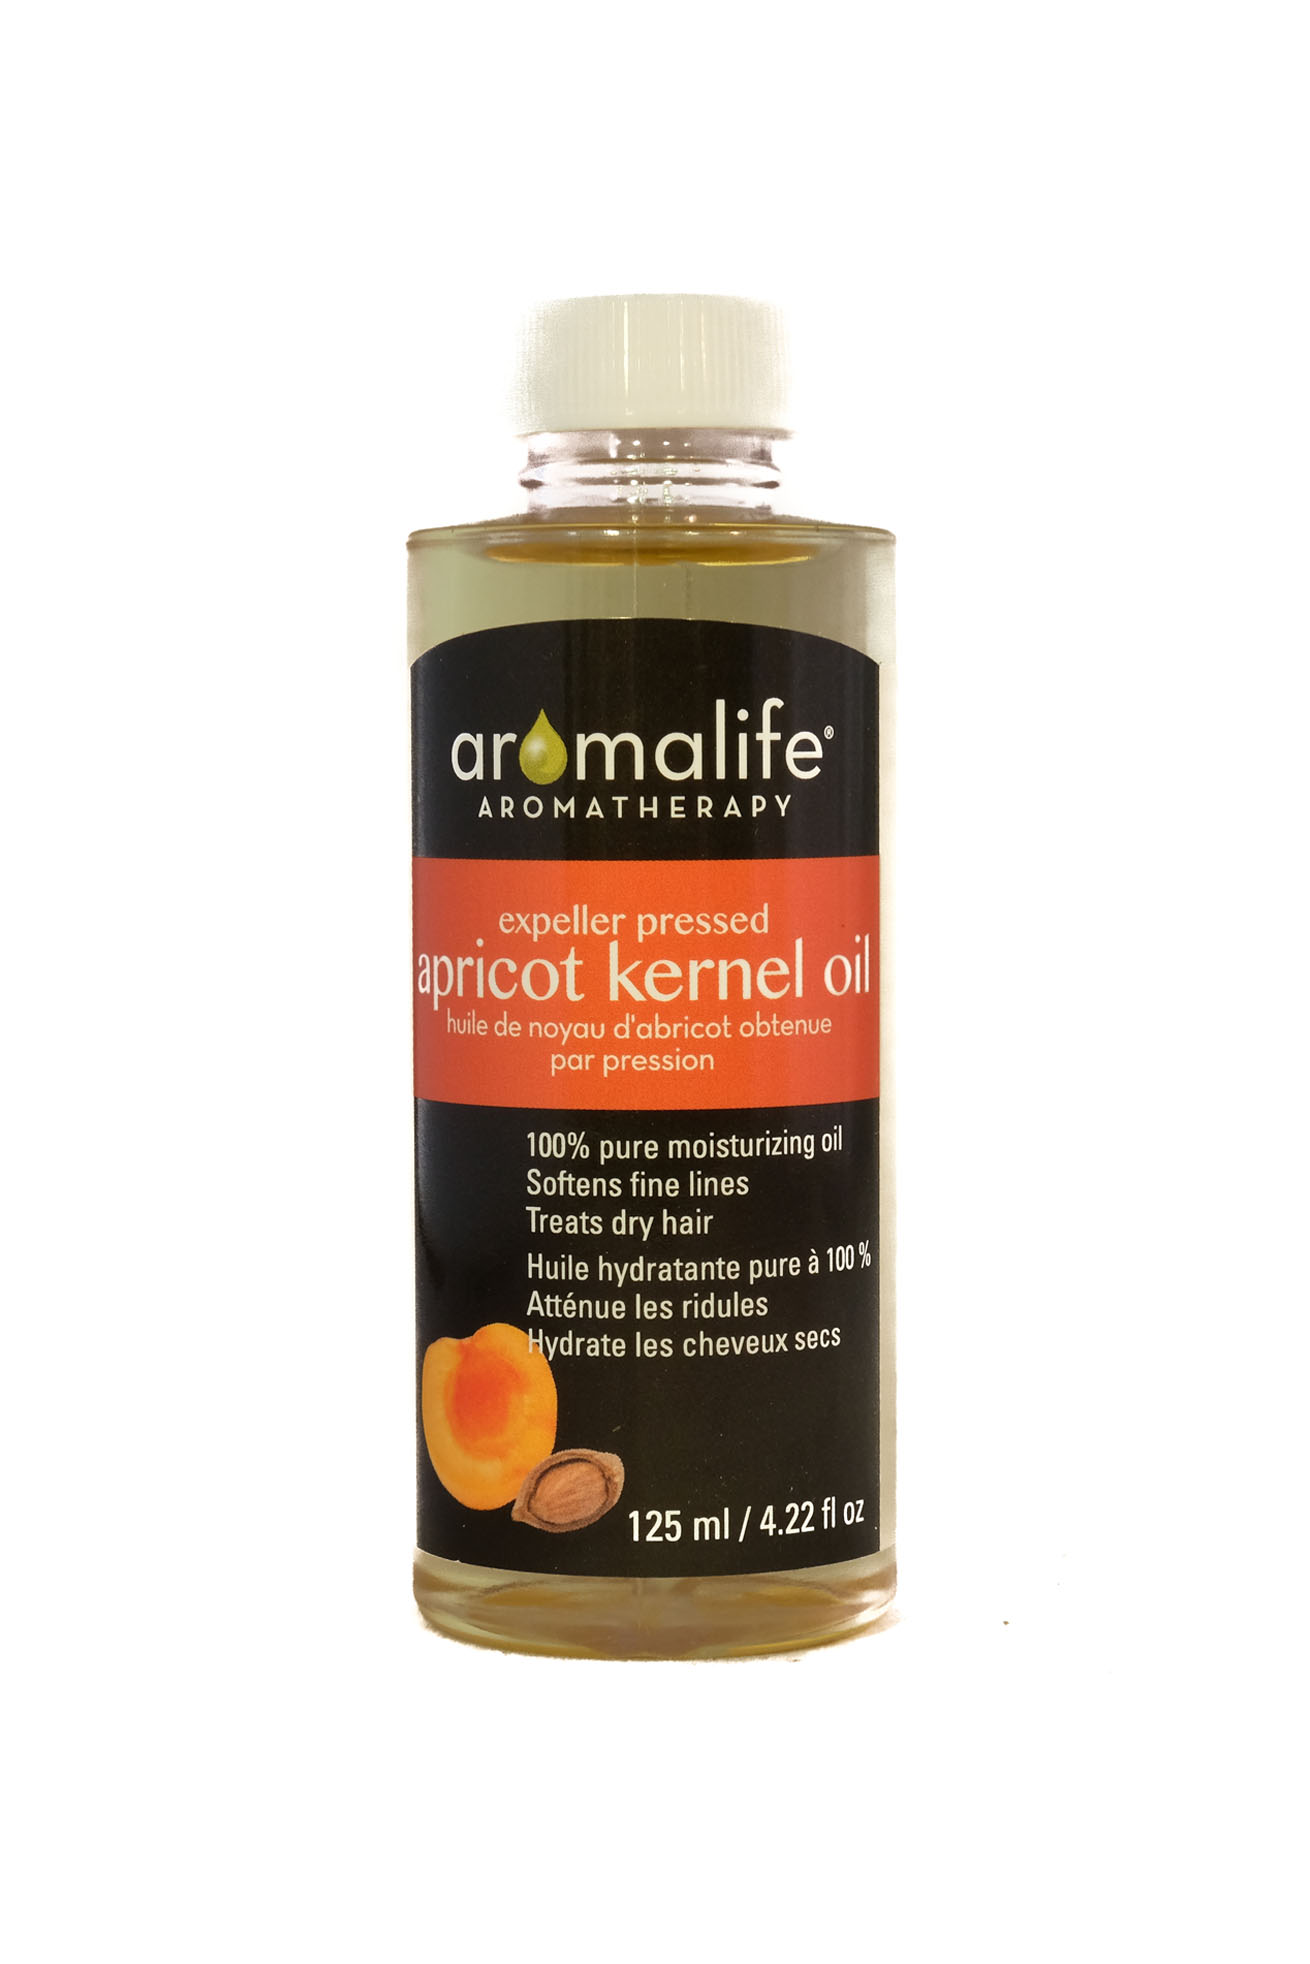 Aromalife Raumspray Schutzengel 100 ml – Aromalife